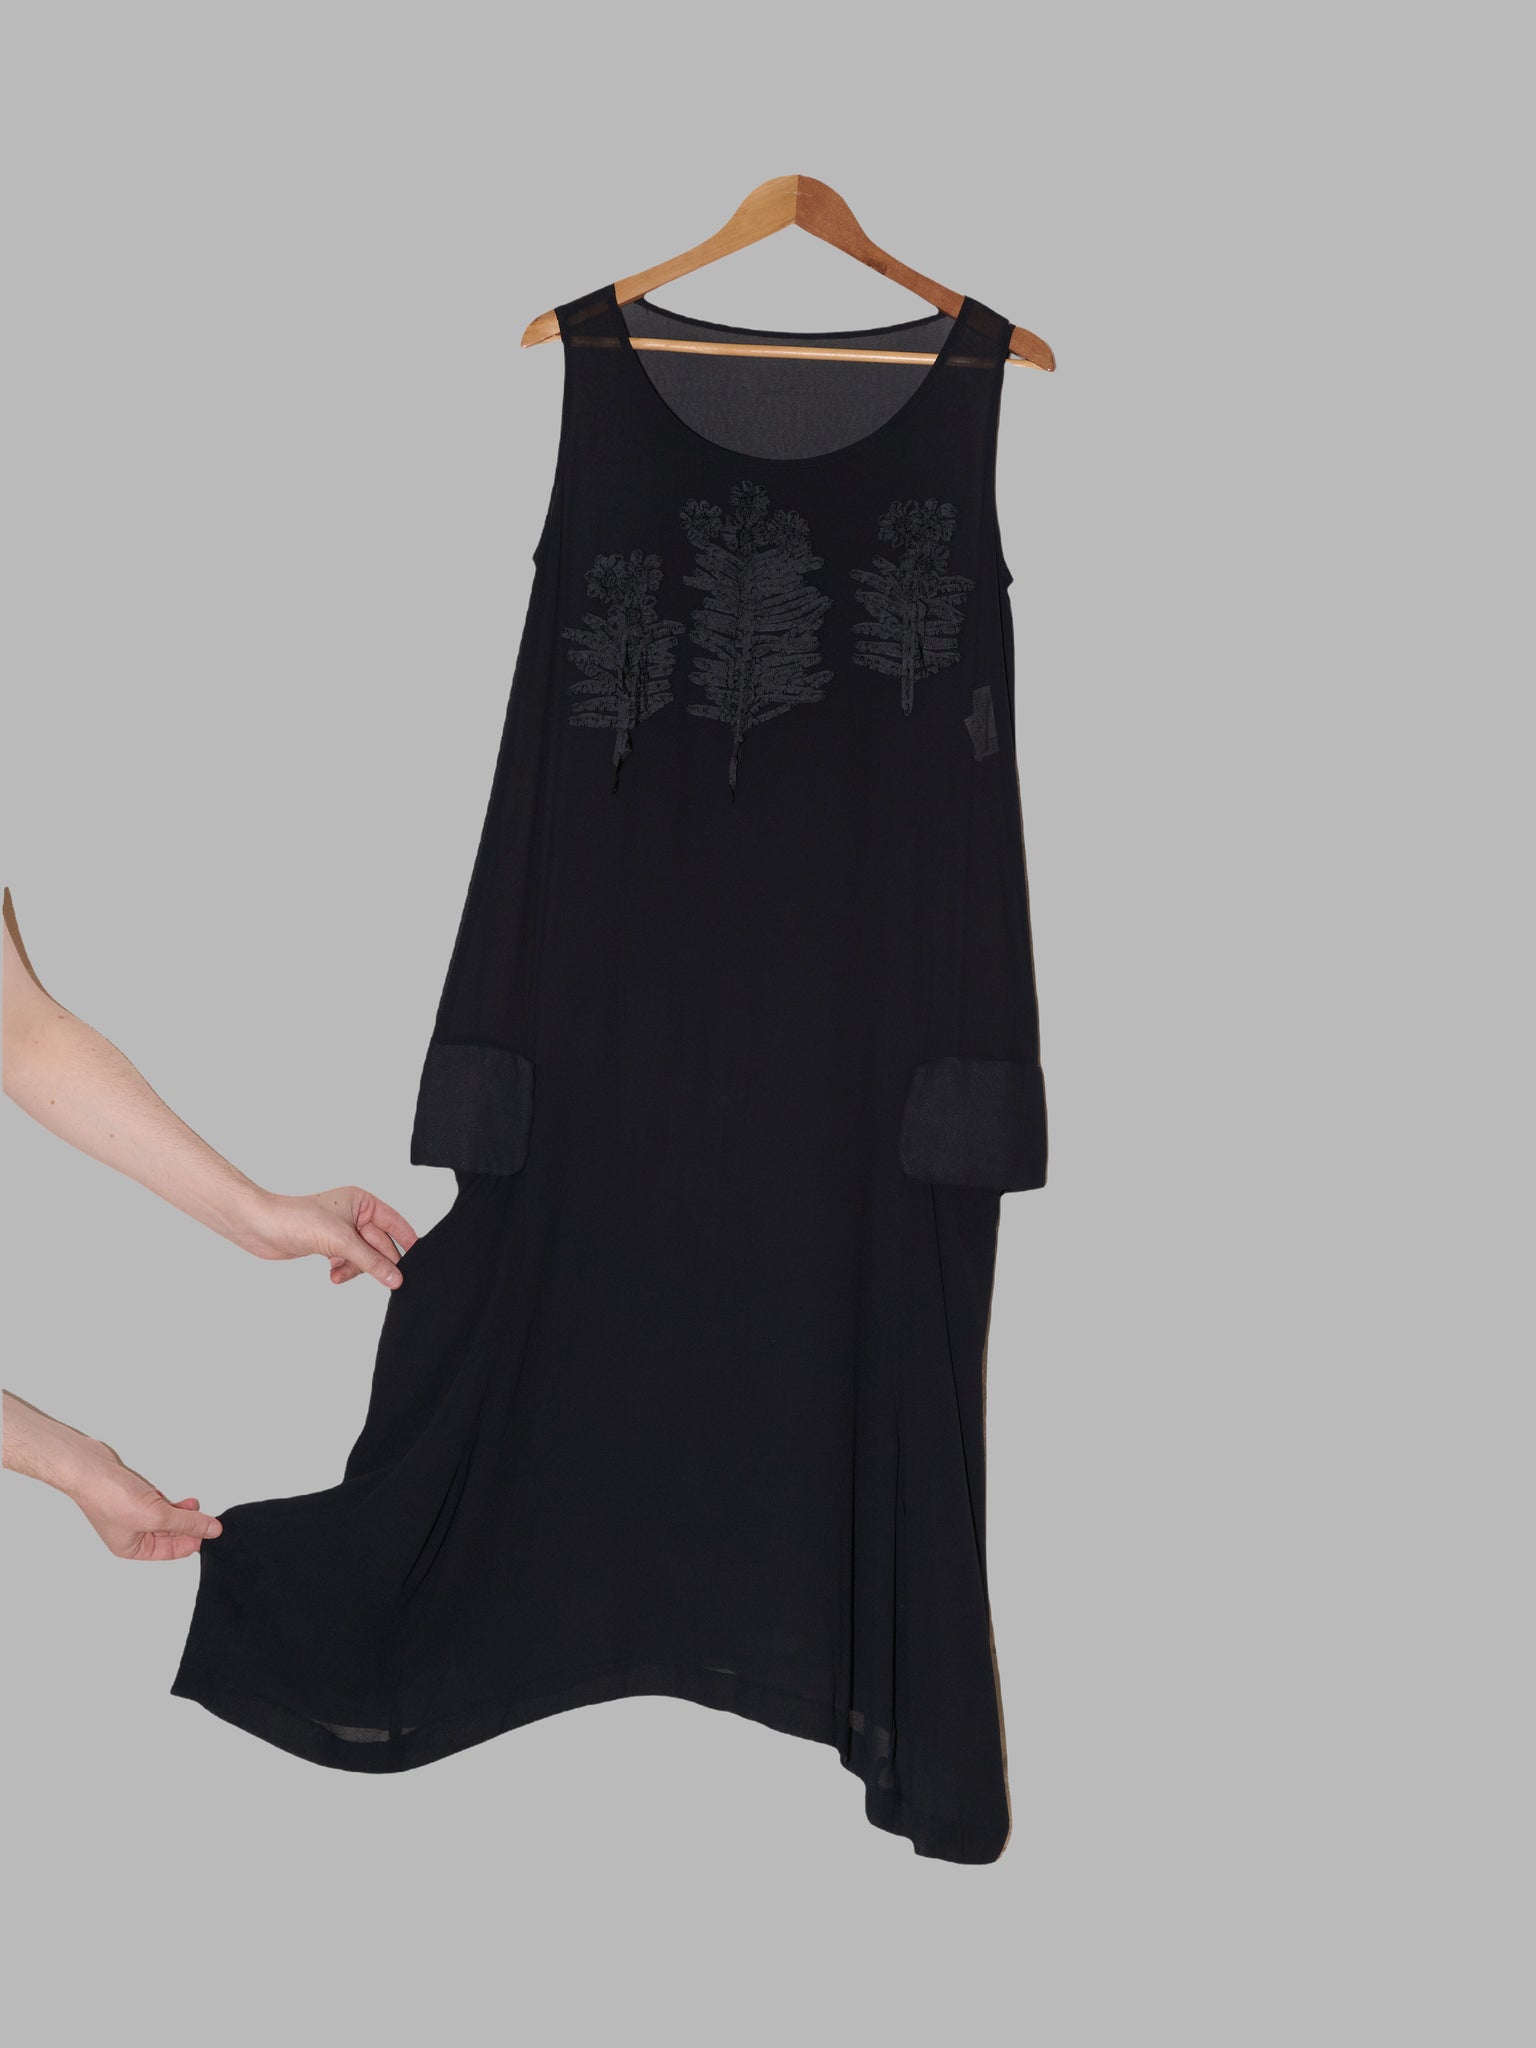 Comme des Garcons 1995 sheer black crepe sleeveless dress with leaf applique